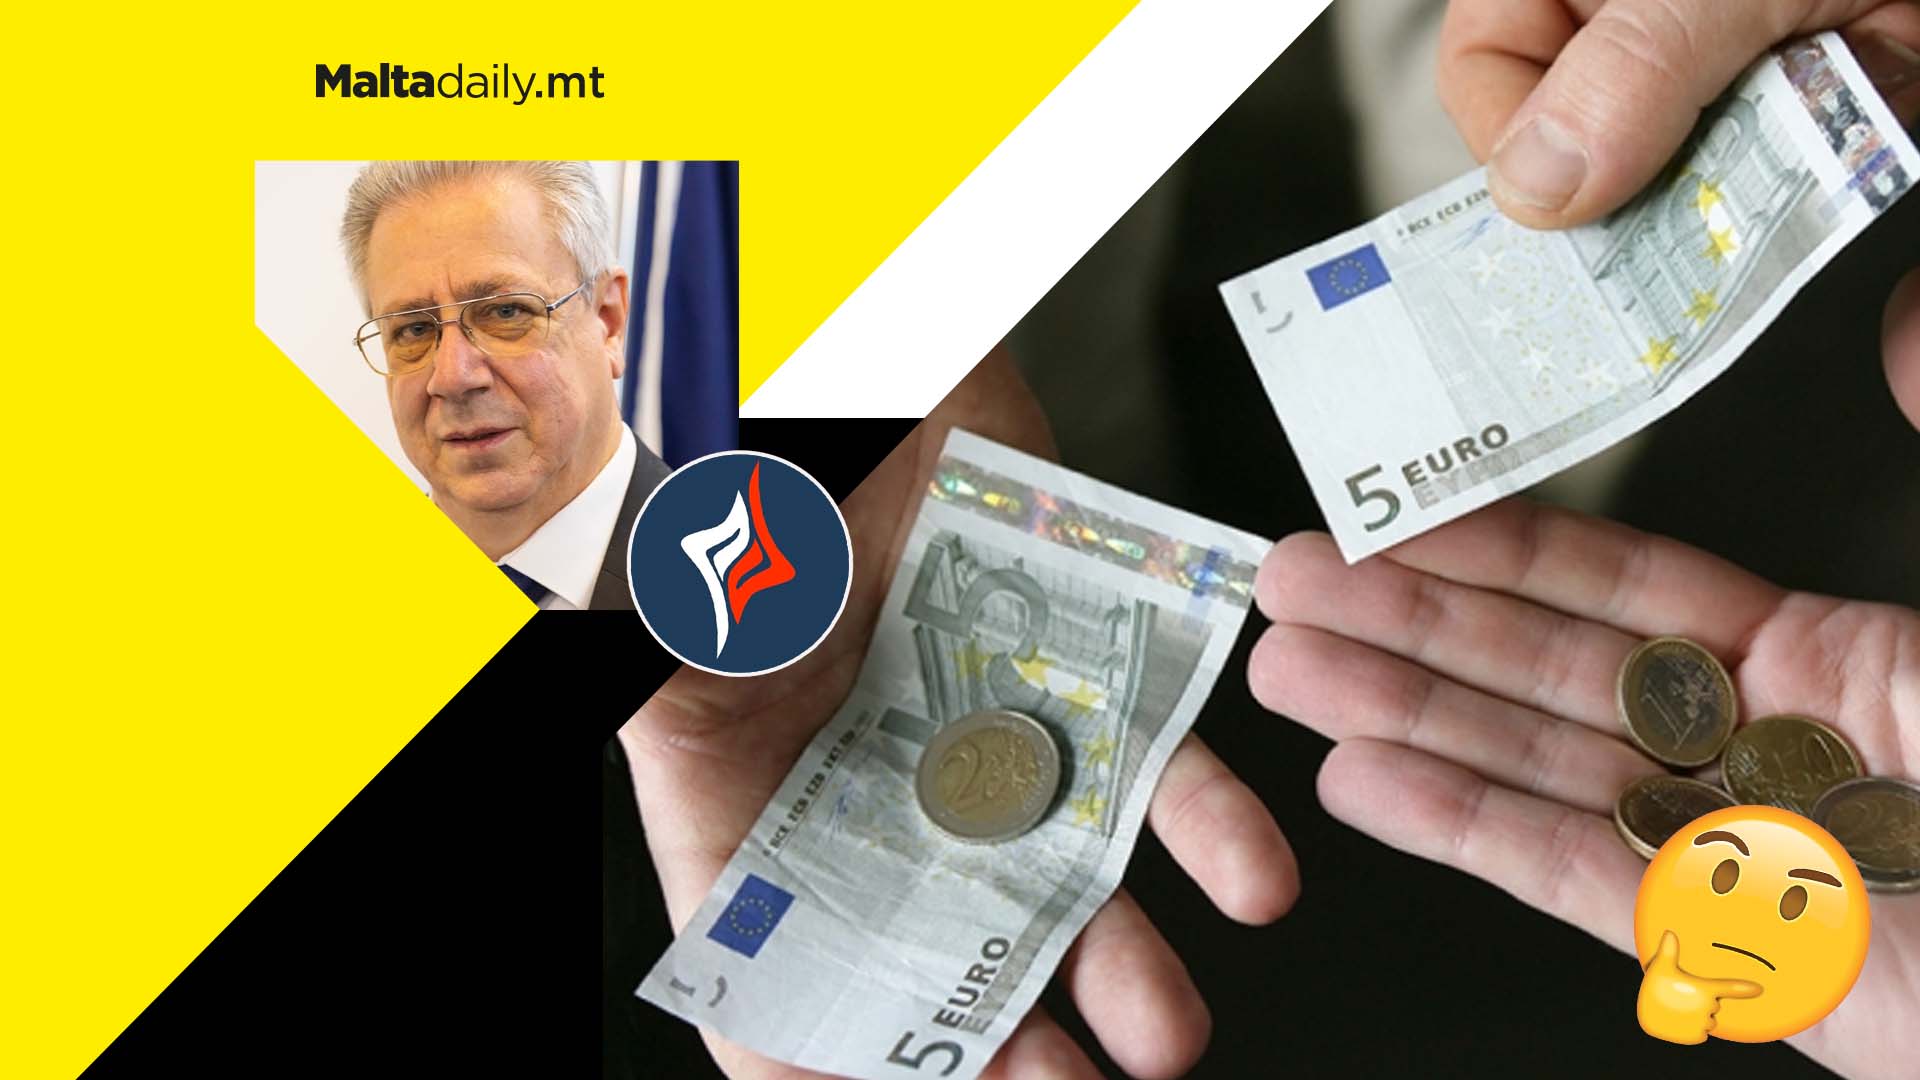 Partit Popolari promsies to double minimum wage to €1.5K per month